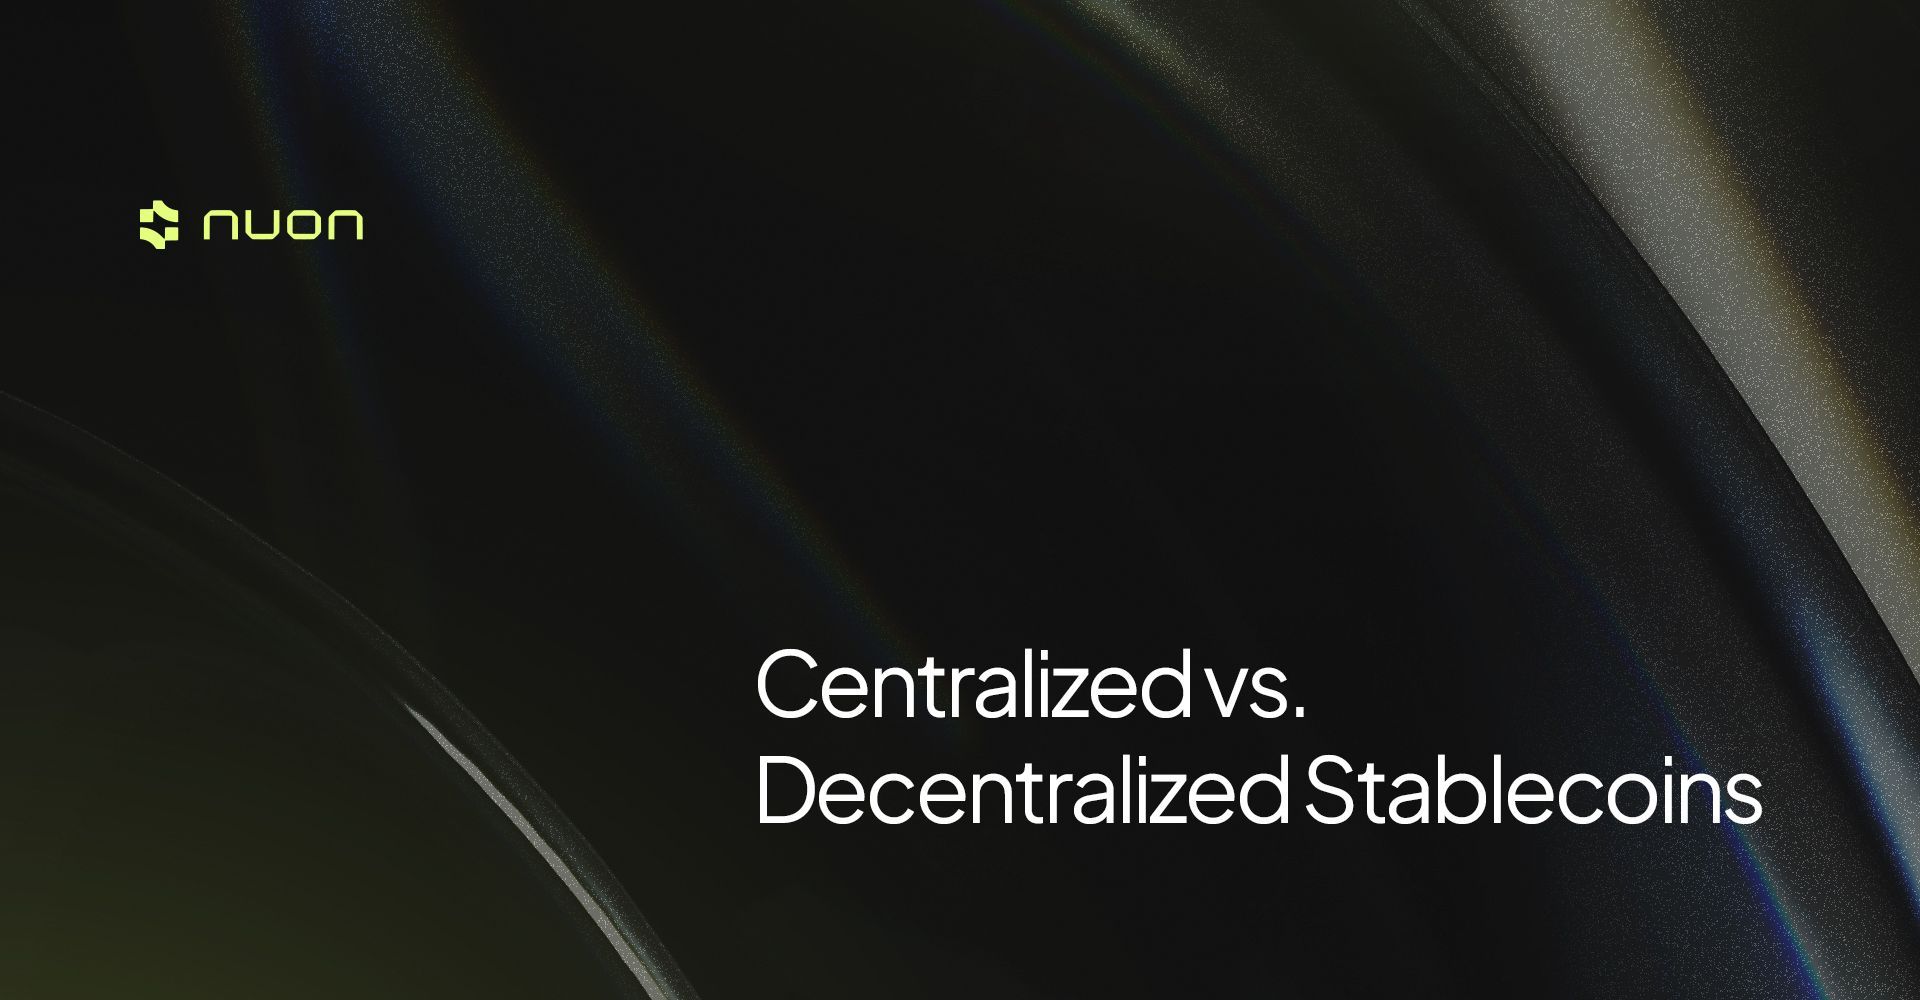 Centralized vs. decentralized stablecoins